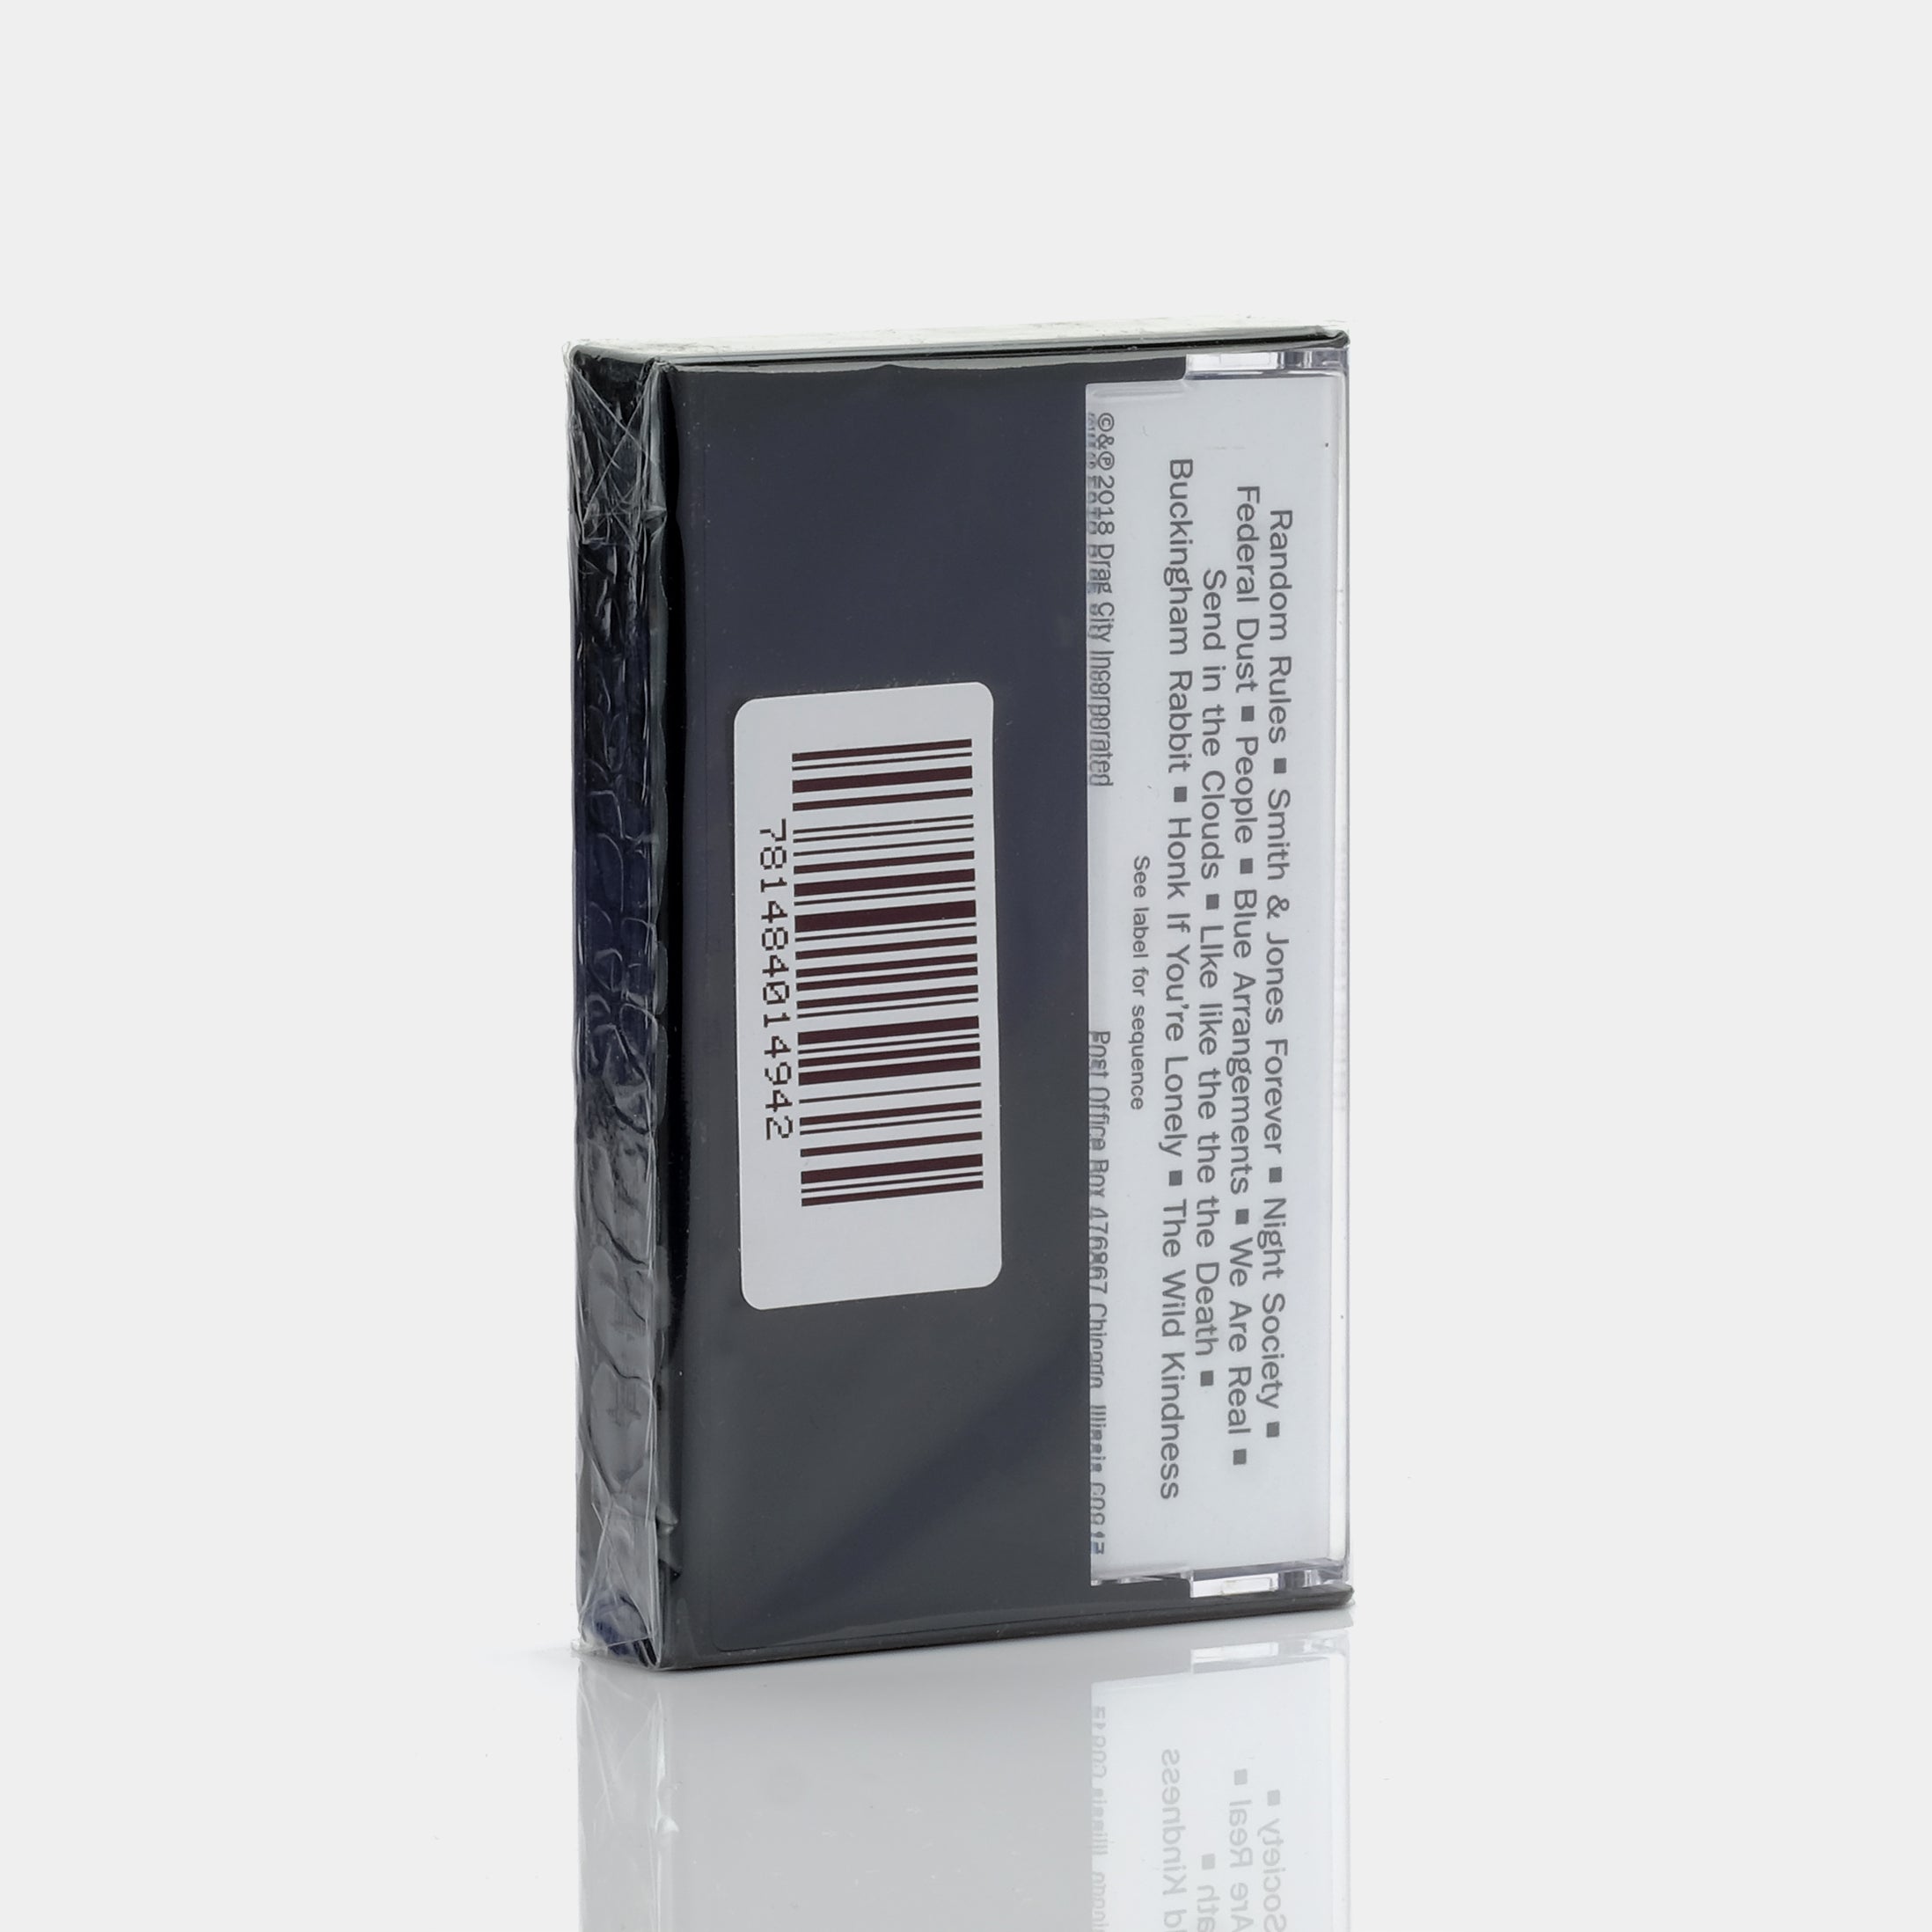 Silver Jews - American Water Cassette Tape